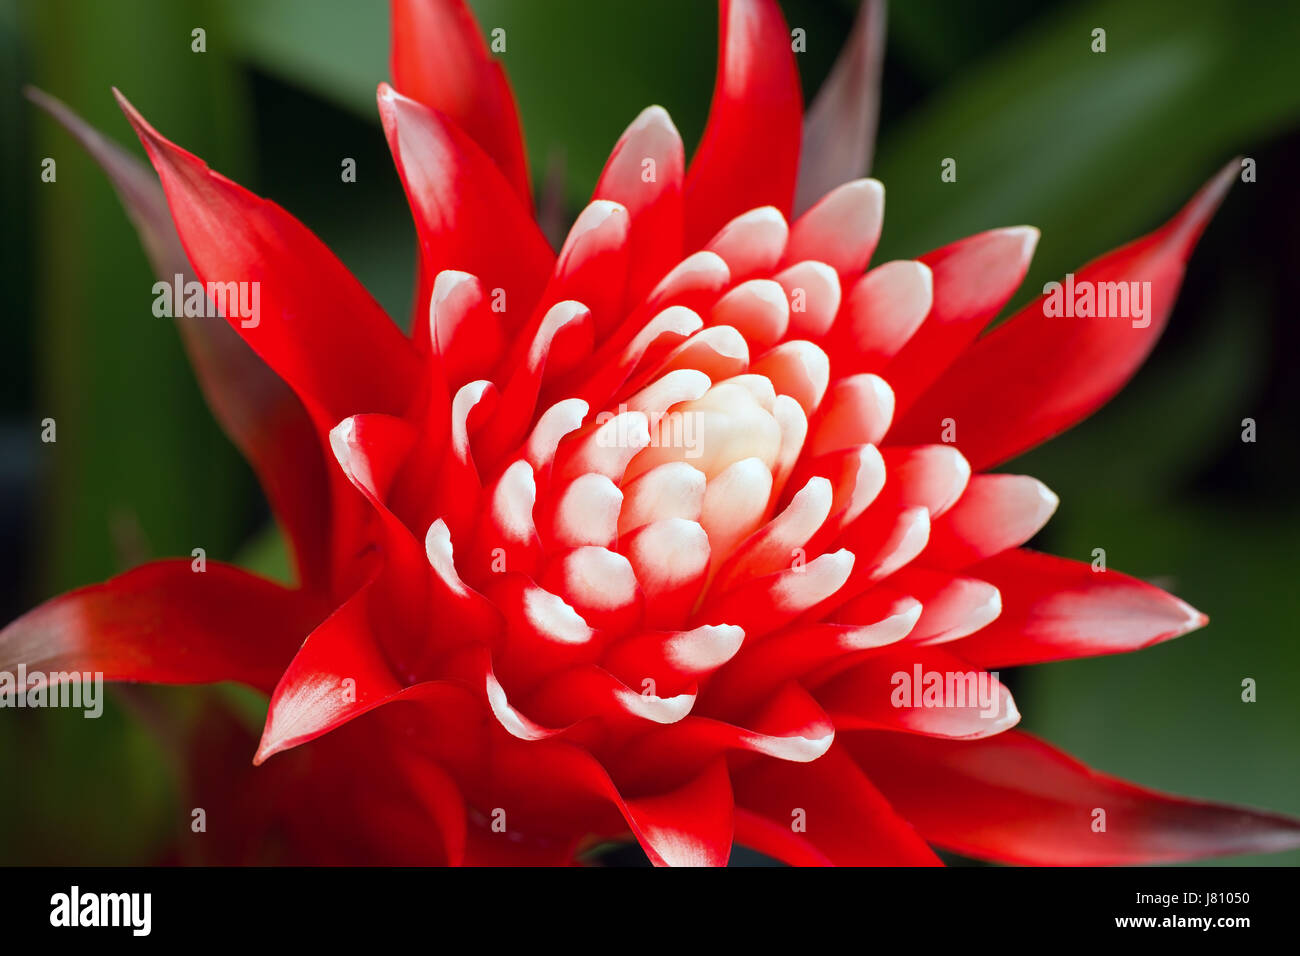 Nice red bromeliad flower Stock Photo